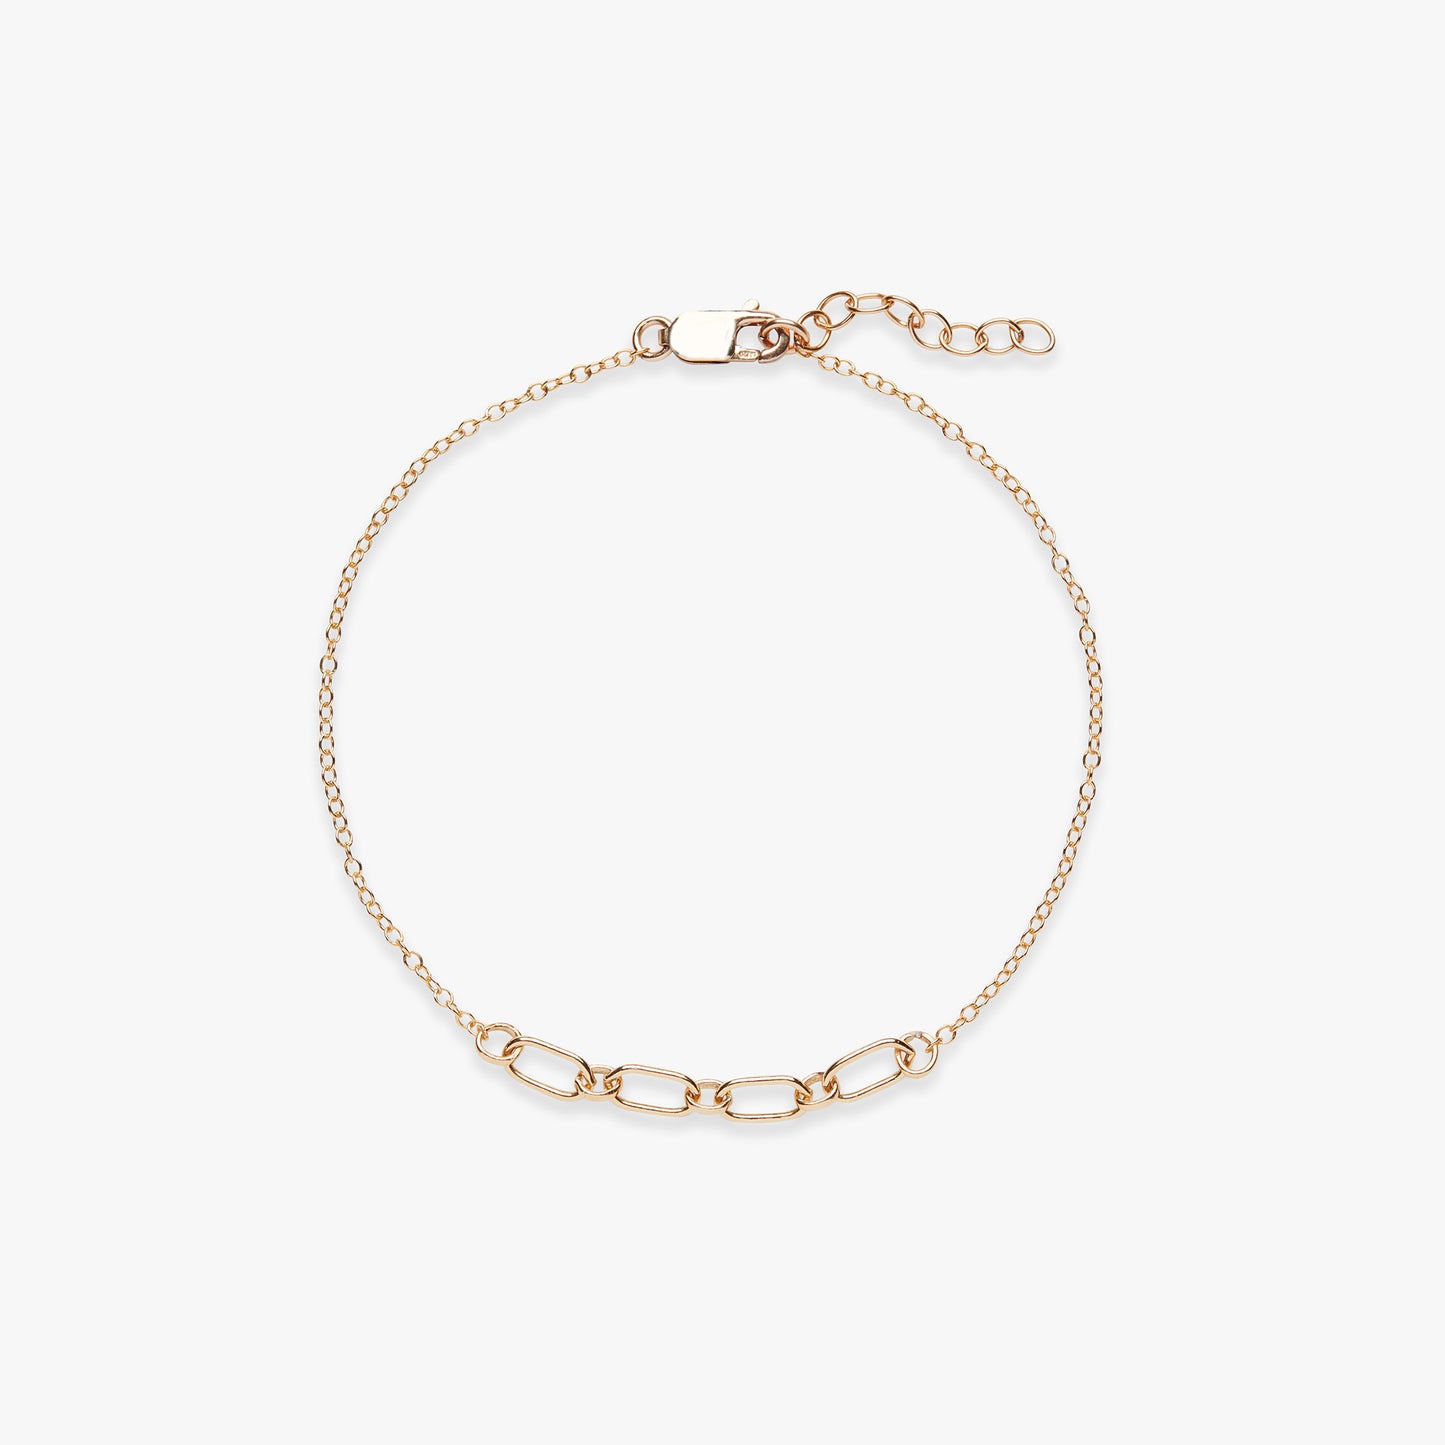 Oval links chain bracelet gold filled